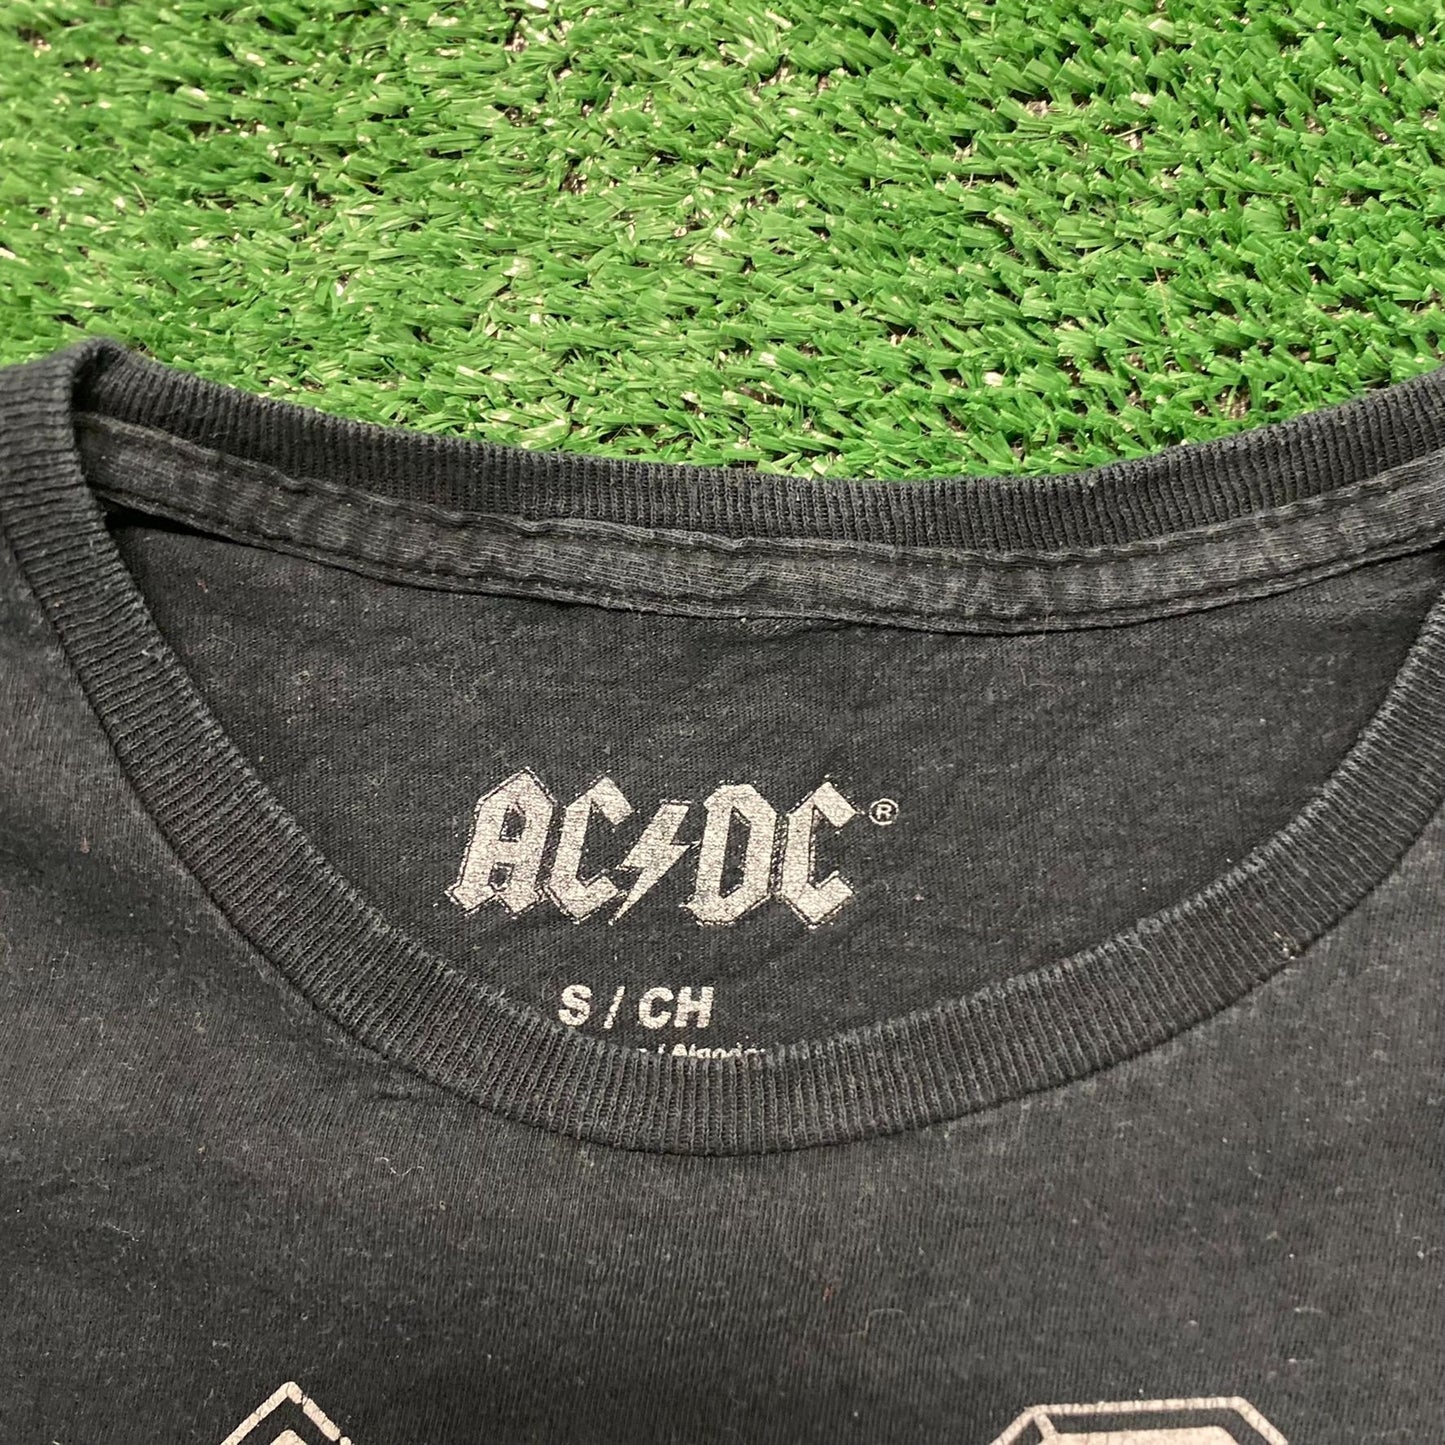 AC/DC Back in Black Retro Rock Band T-Shirt